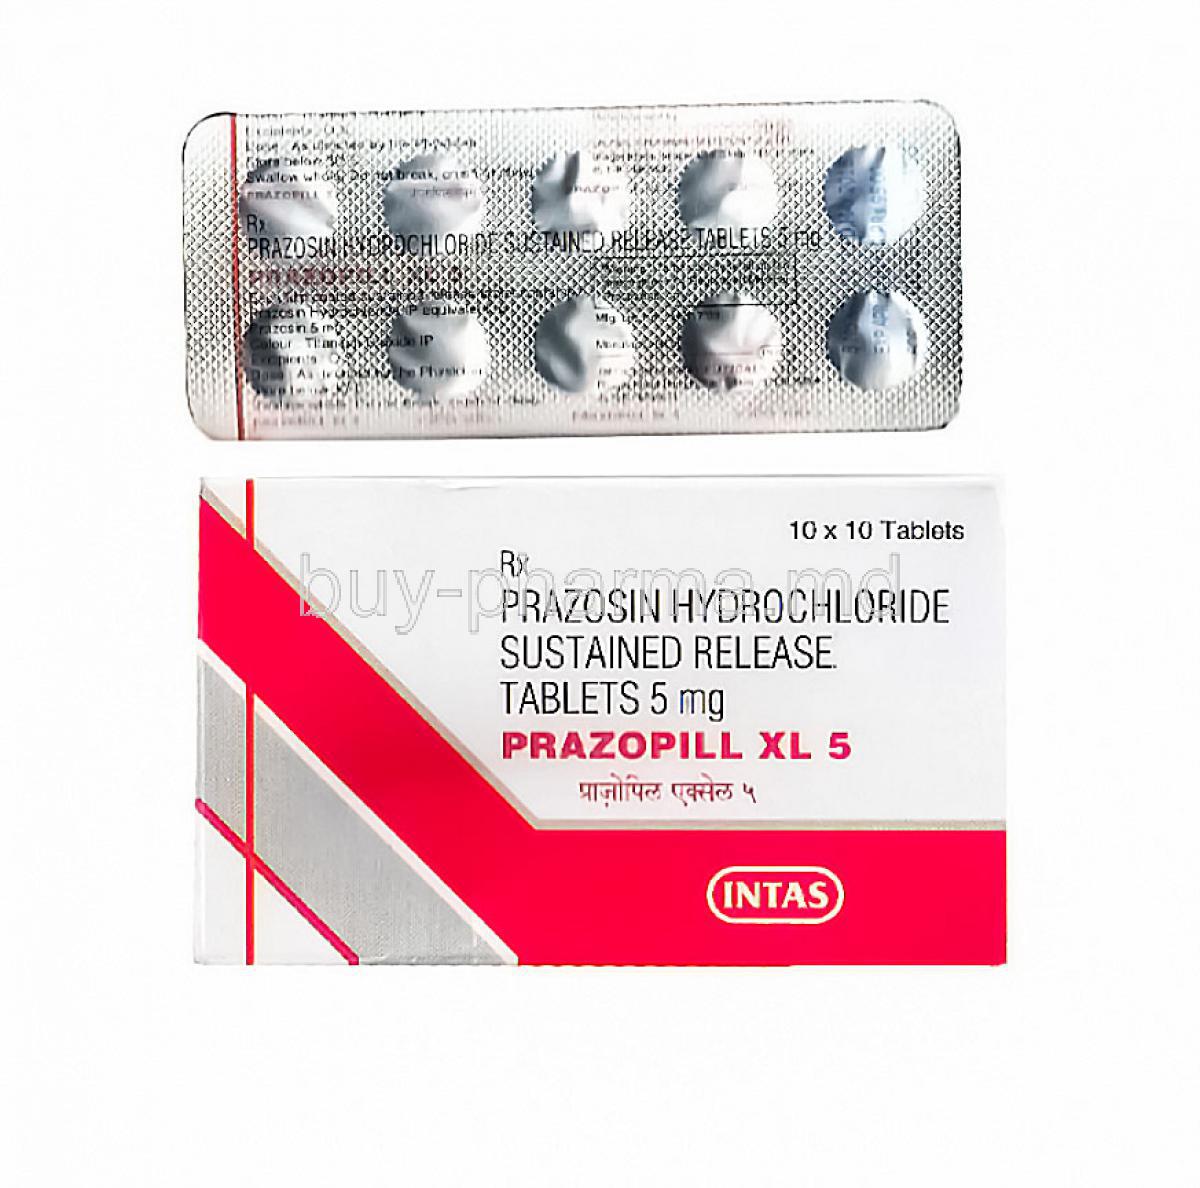 Generic Minipress XL, Prazosin hydrochloride sustained release, 10 x 10 tabs ( Prazopill XL) 5mg , box packging and blister